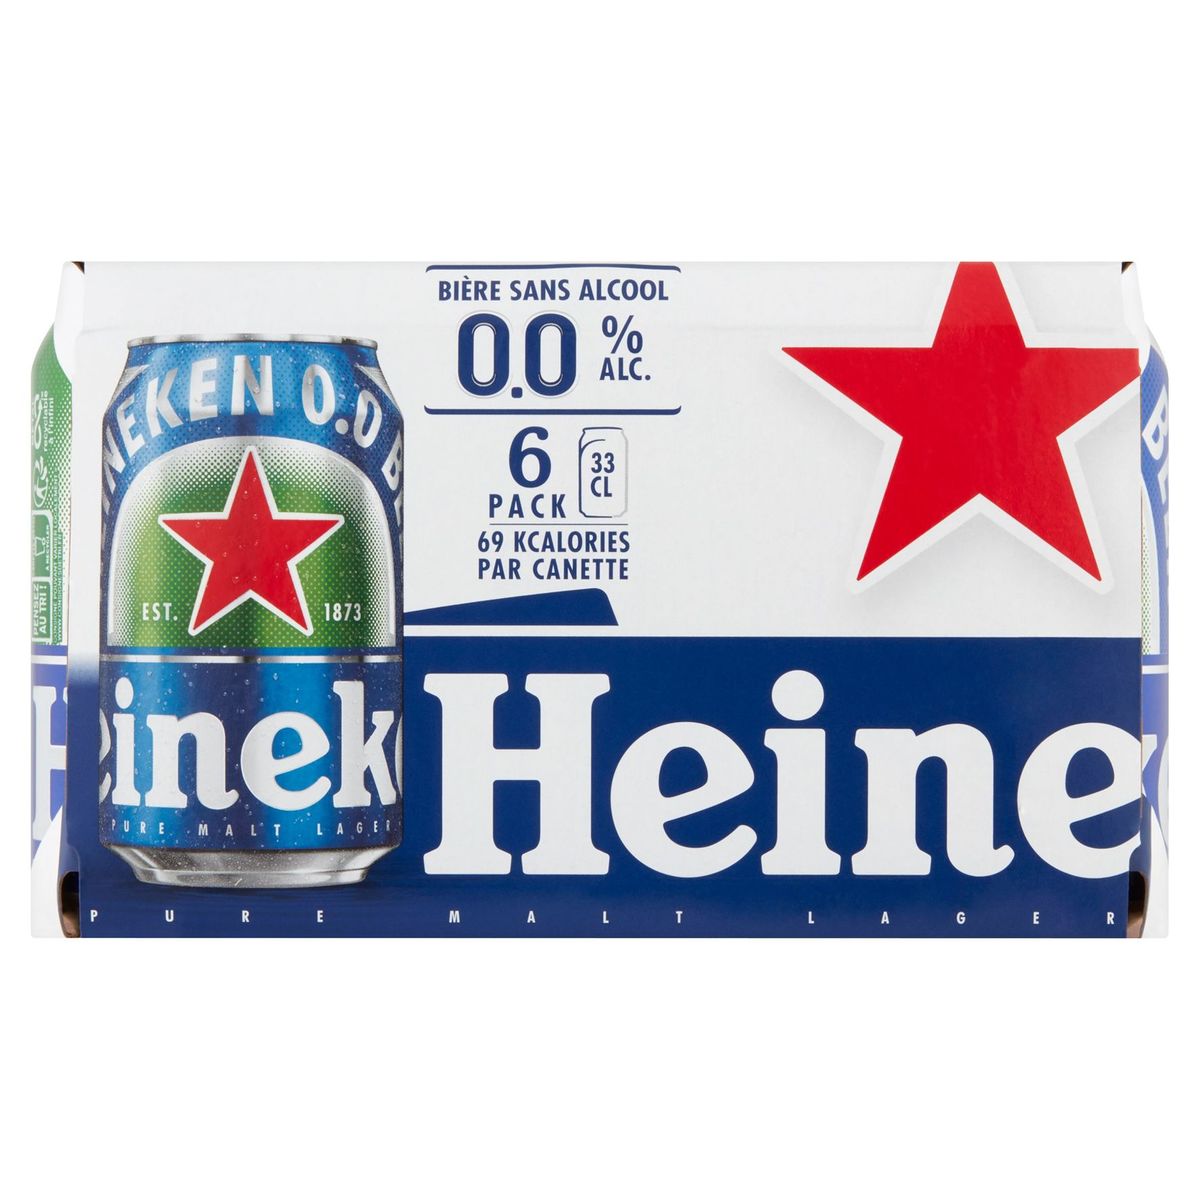 Heineken Blond bier Pils Alcoholvrij bier 6 x 33 cl Blik